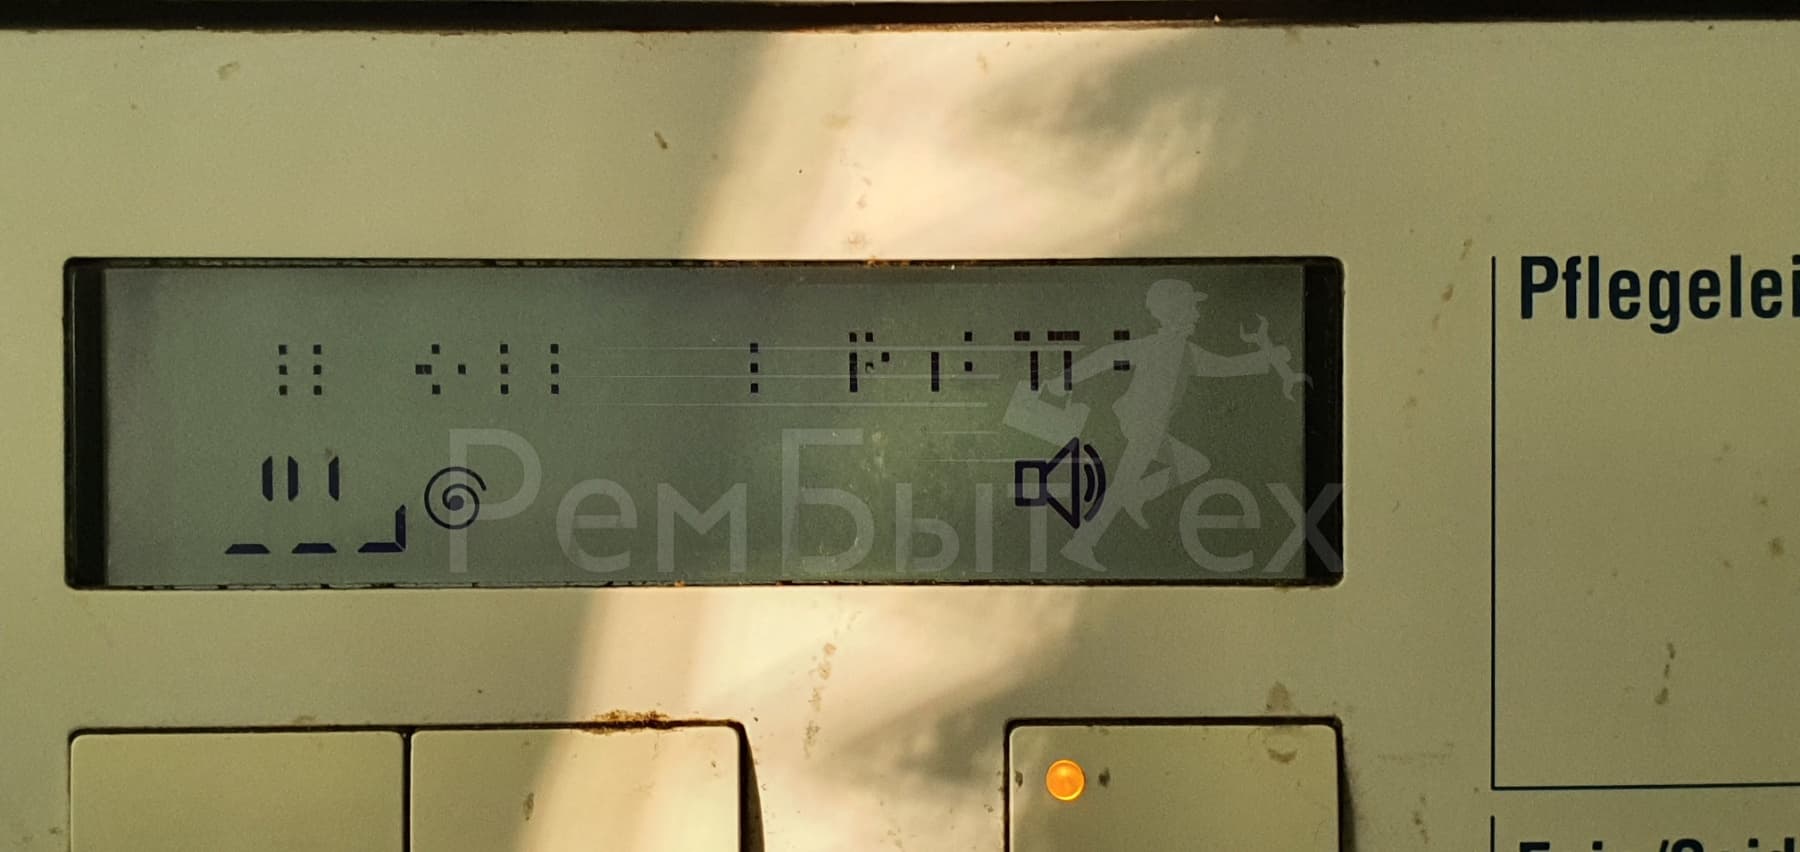 Https rembitteh ru ask answer. Знаки не работает стиральной машины. Стиральная машина не включается пишет f:16.